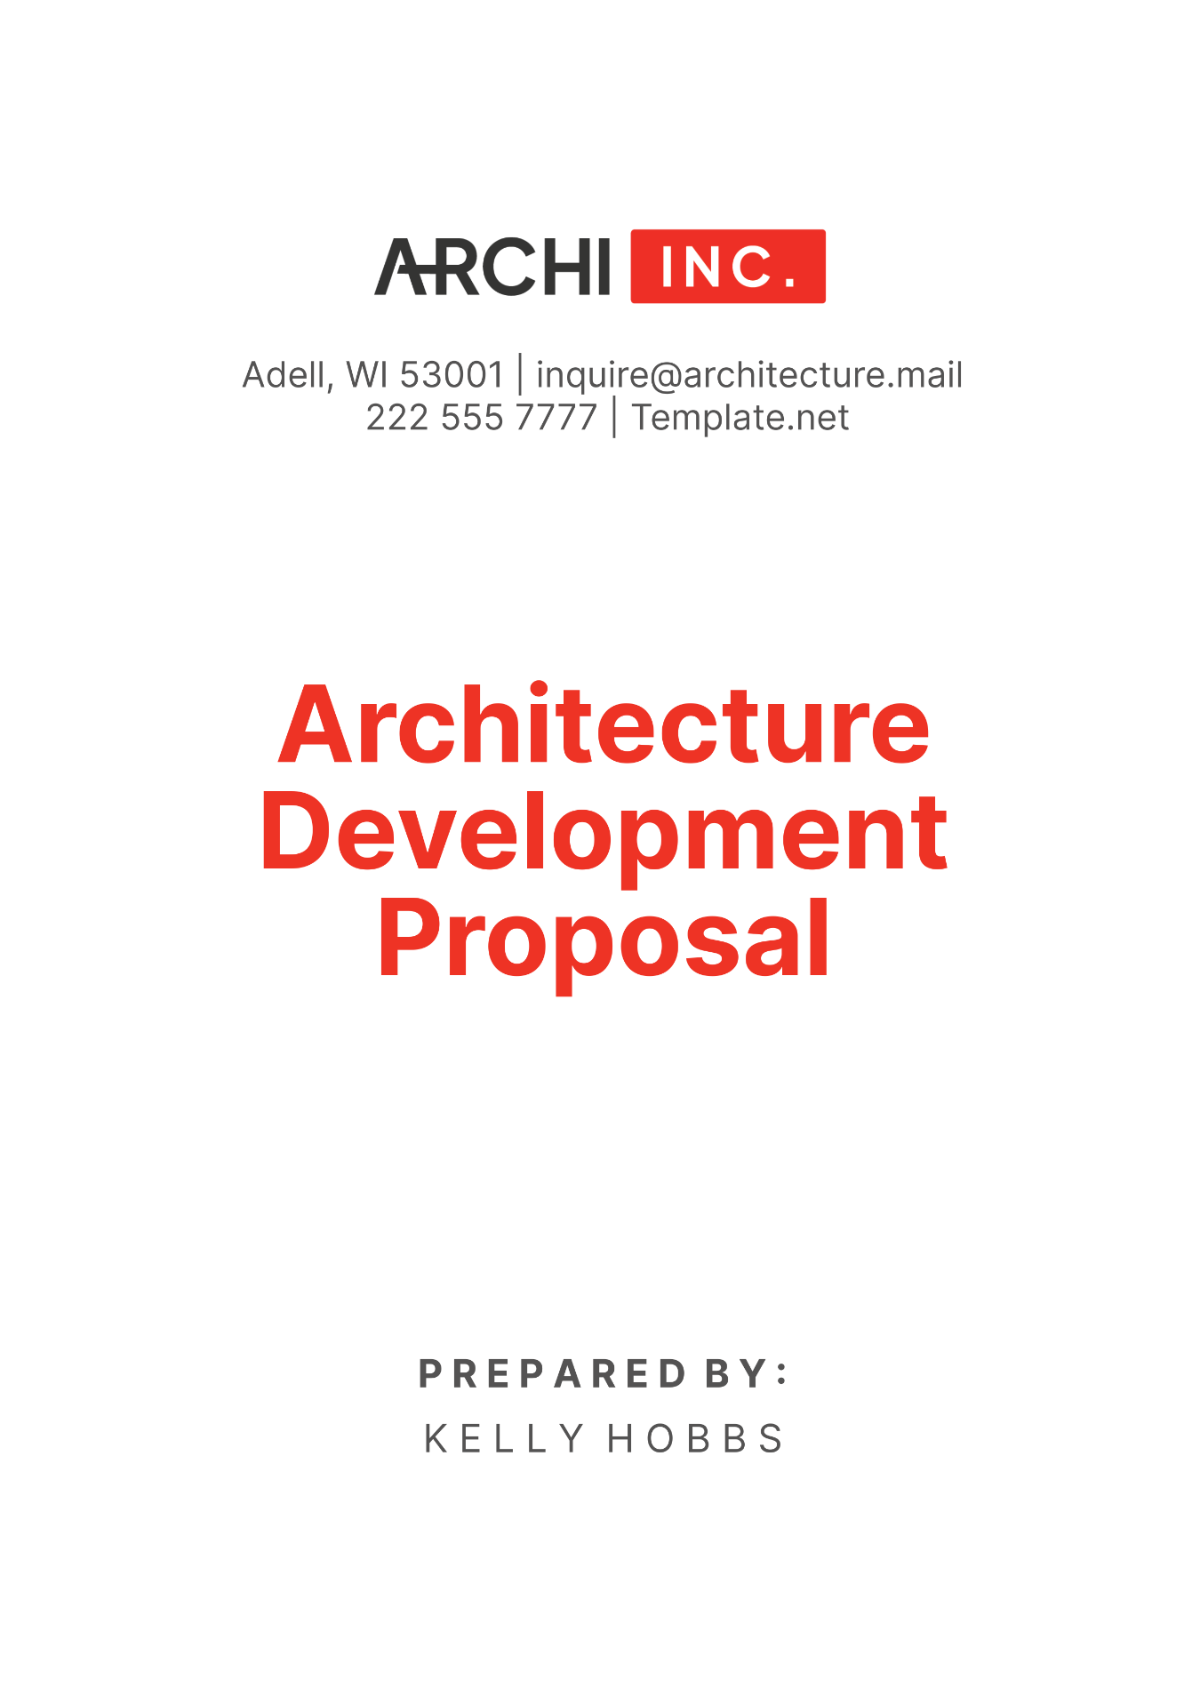 Free Architecture Development Proposal Template